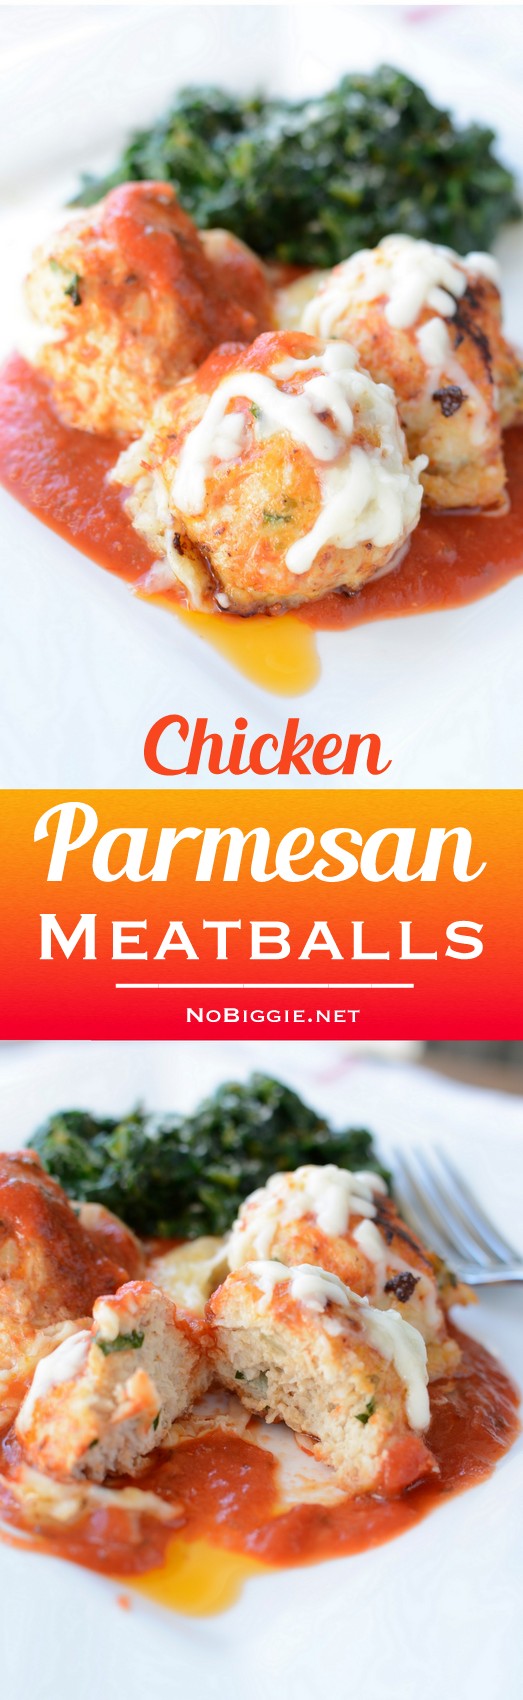 http://www.nobiggie.net/wp-content/uploads/2016/03/chicken-parmesan-meatballs.jpg